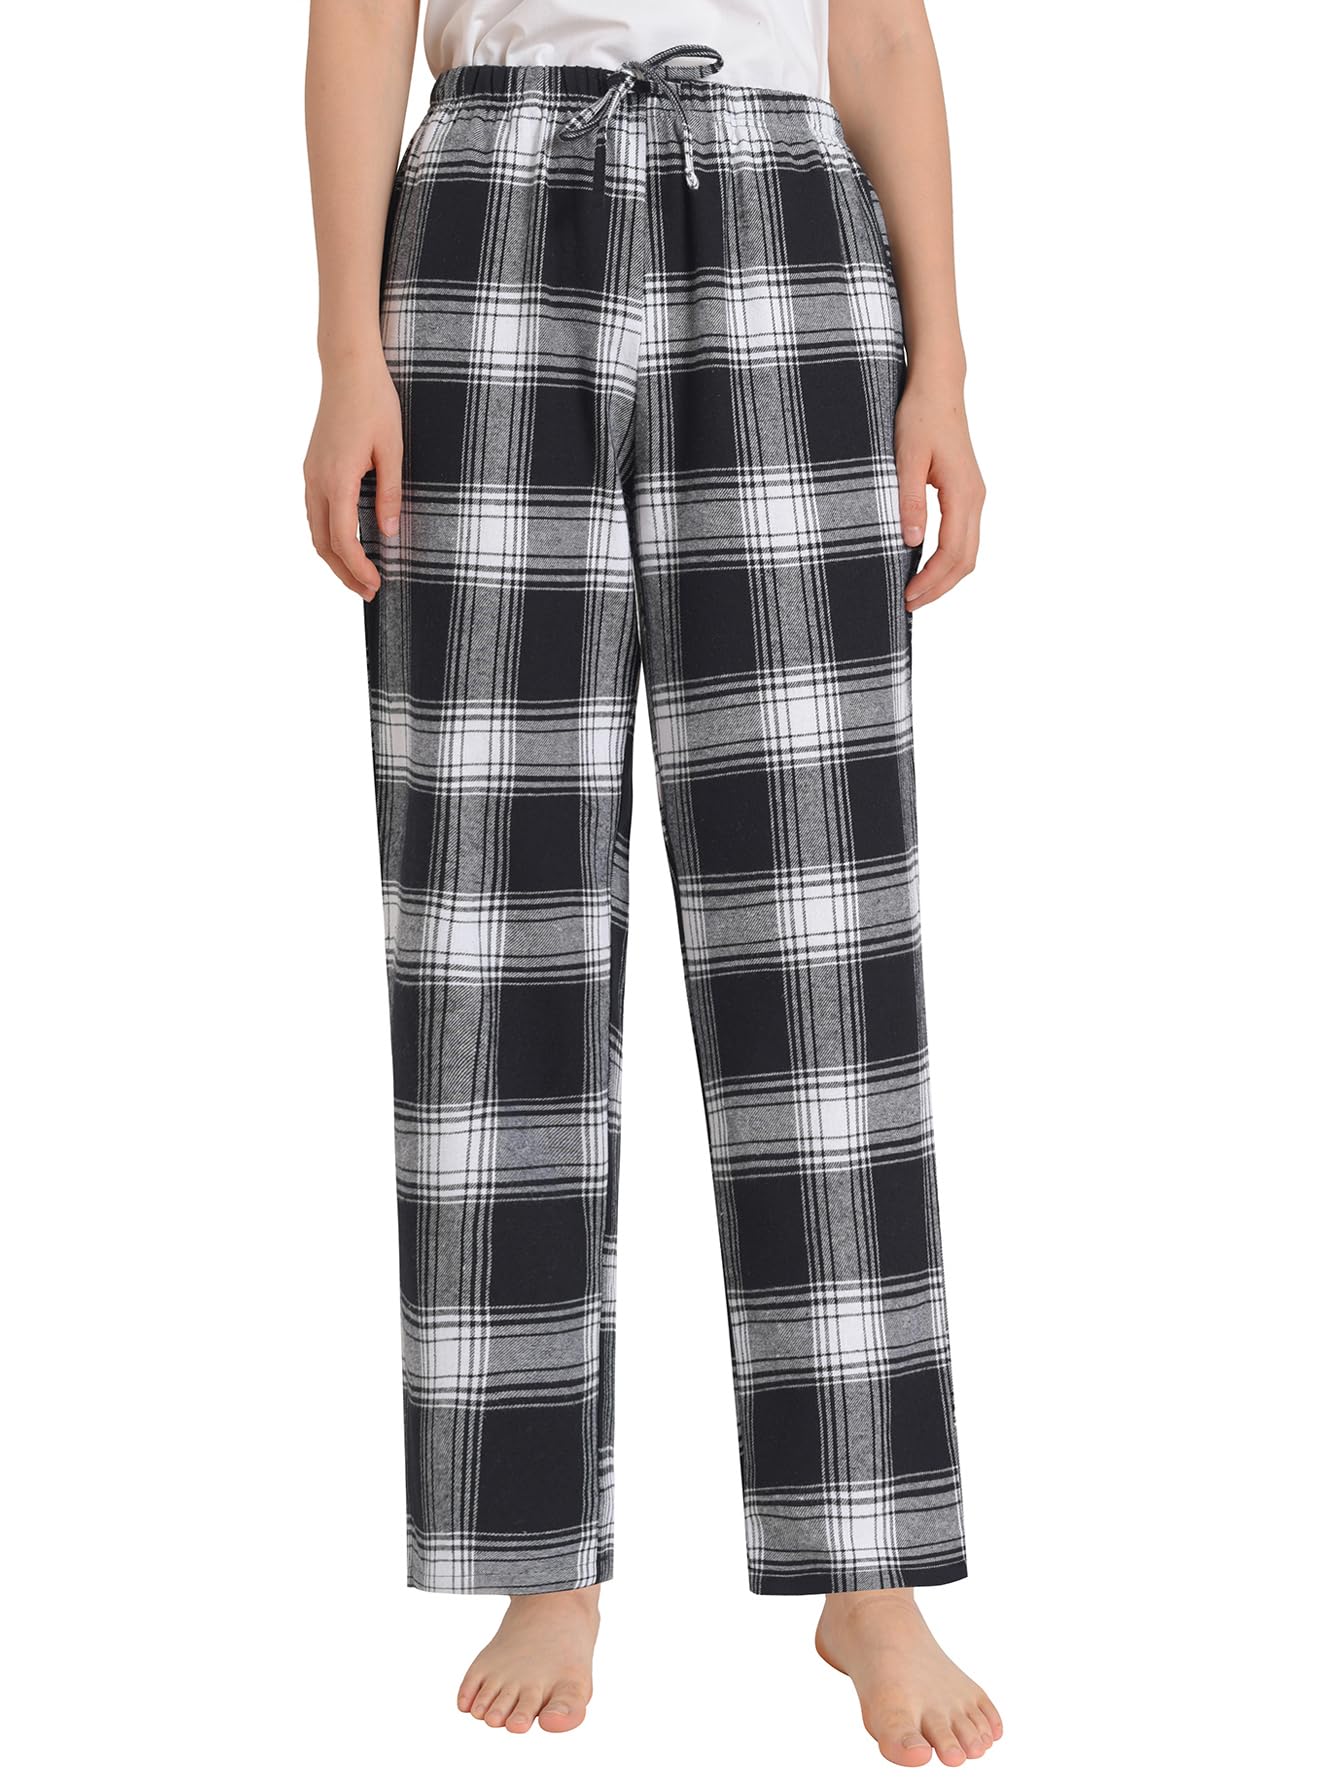 Women's Petite Cotton Lounge Pants Flannel Pajama Pants with Pockets